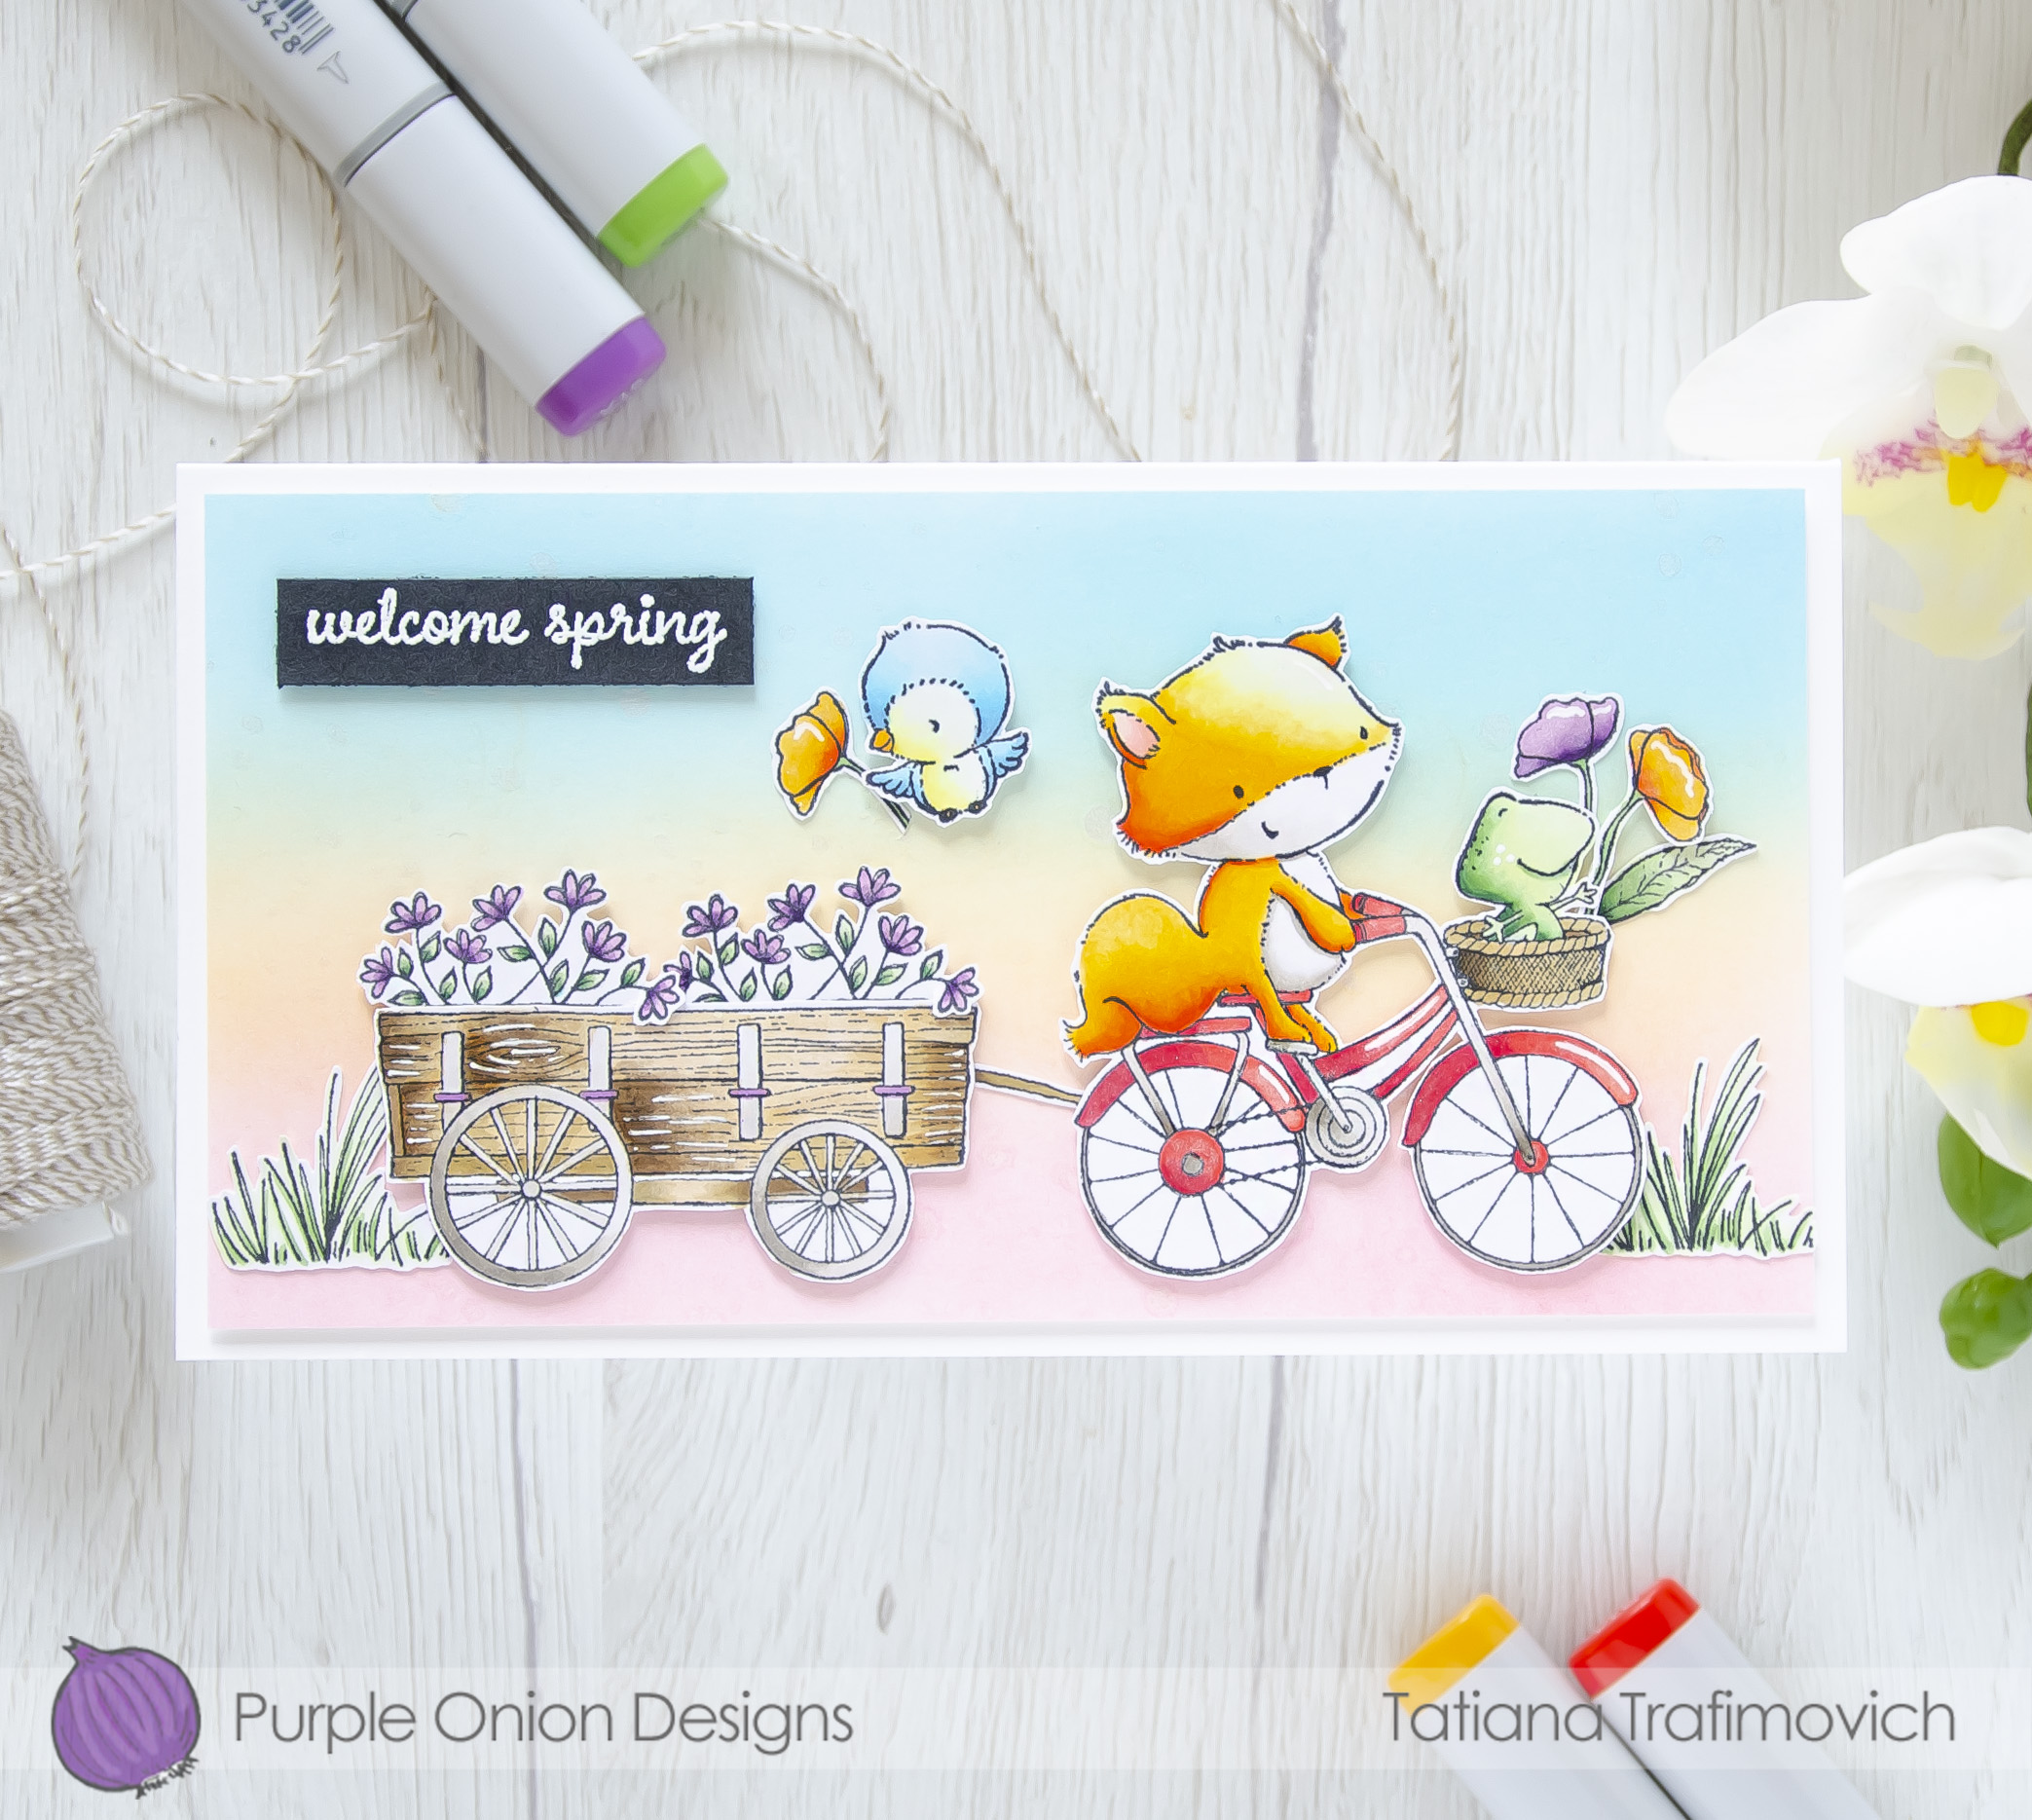 Welcome Spring #handmade card by Tatiana Trafimovich #tatianacraftandart - stamps by Purple Onion Designs 